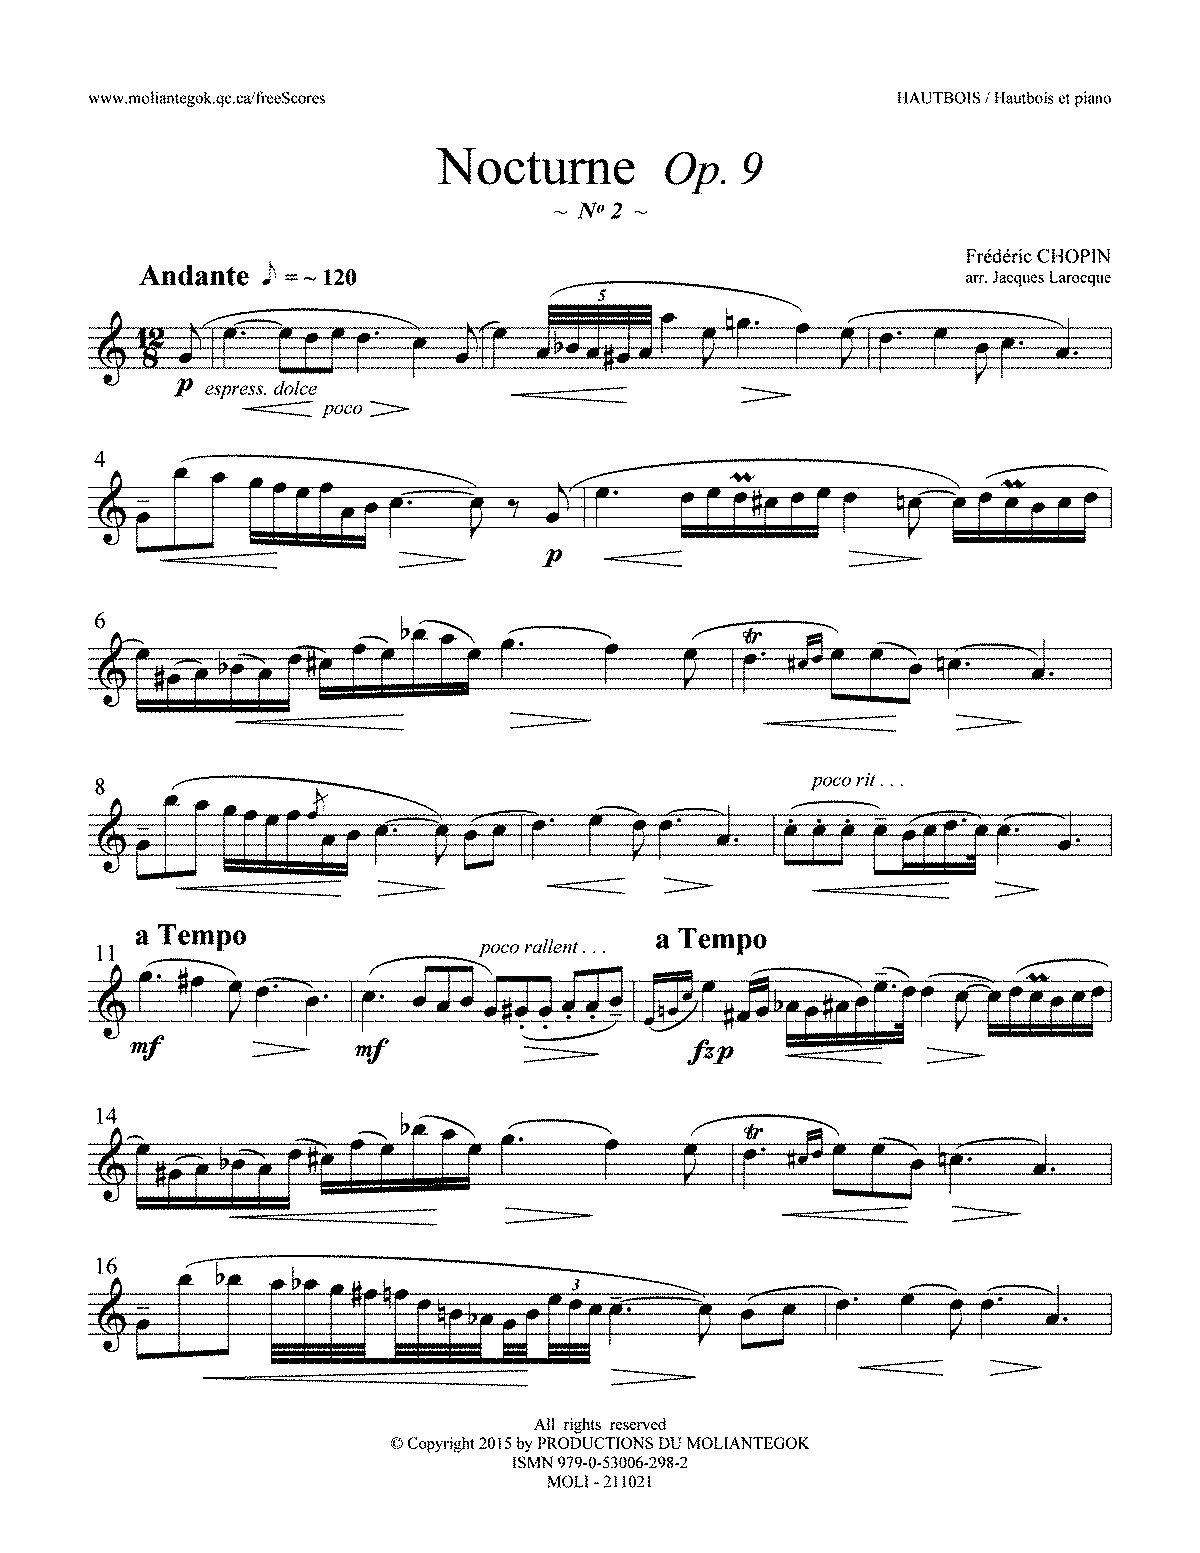 Ilustrar concepto chocar File:PMLP02312-CHOPIN-Nocturne Op. 9 No 2=hautb-pno - Oboe.pdf - IMSLP:  Free Sheet Music PDF Download